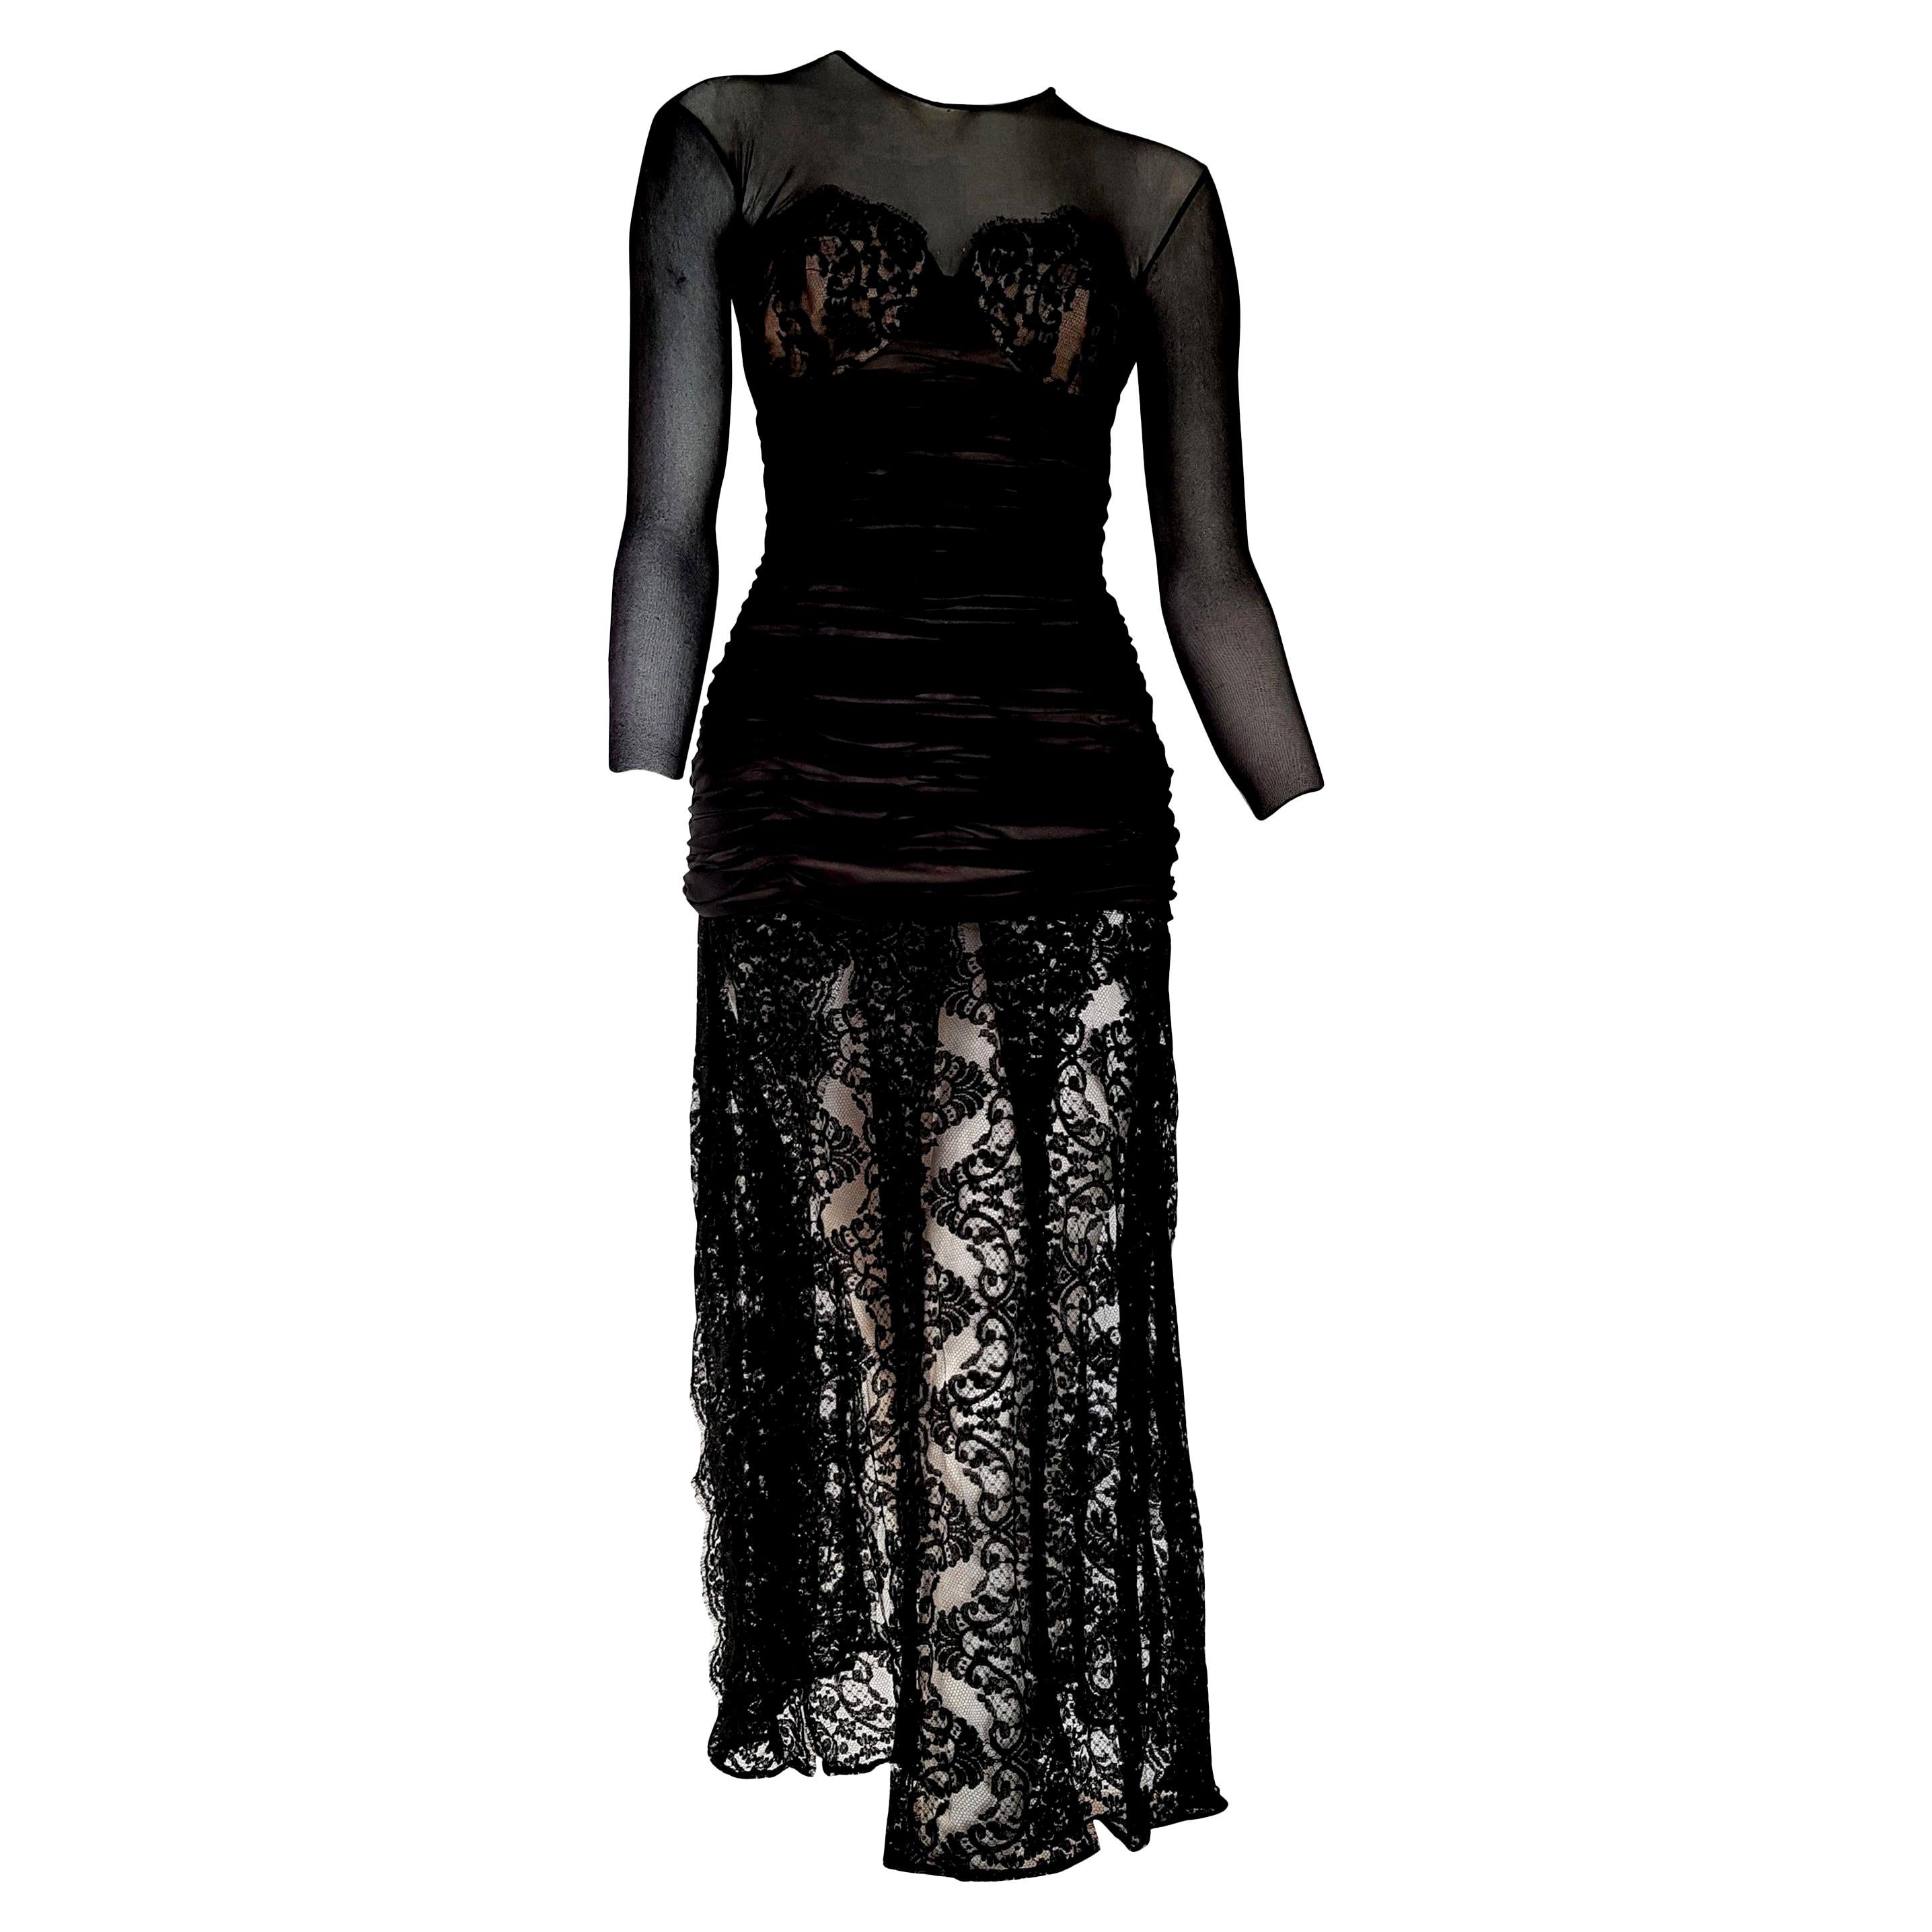 Isabelle ALLARD Paris "New" Couture Chest skirt lace Silk Cotton Dress - Unworn For Sale